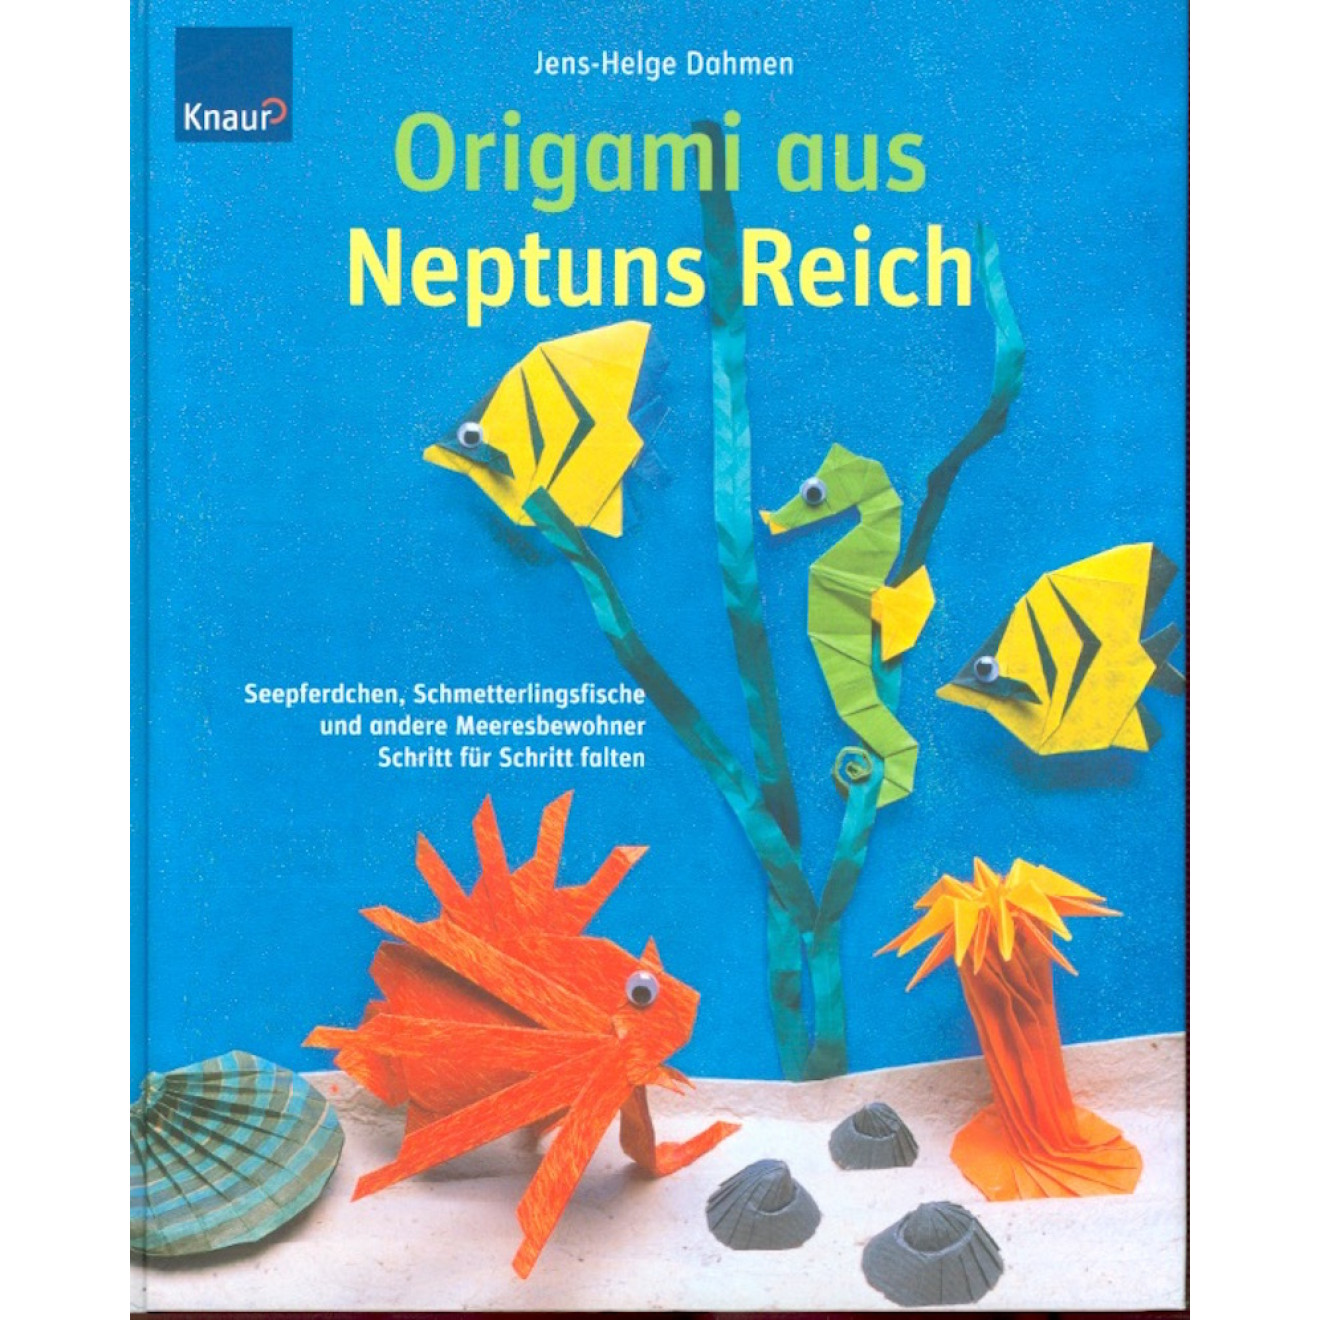 Origami aus Neptuns Reich